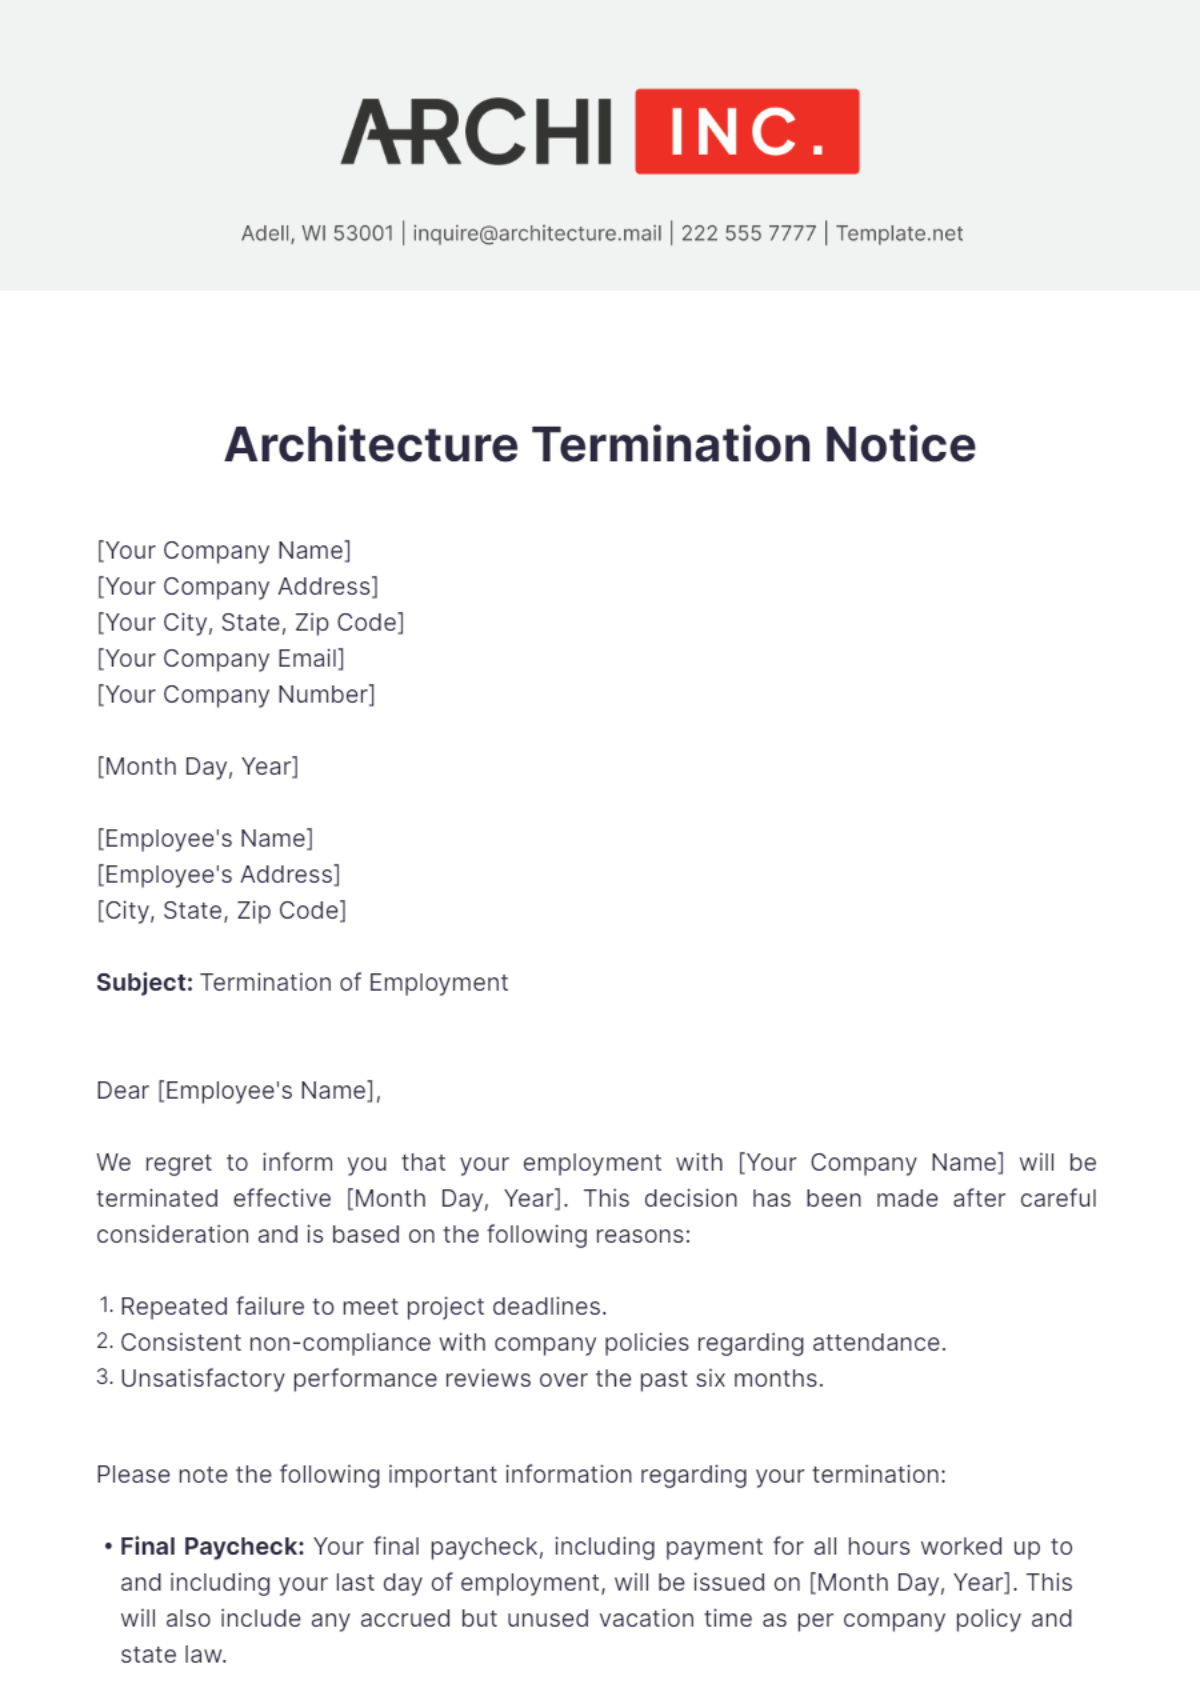 Free Architecture Termination Notice Template